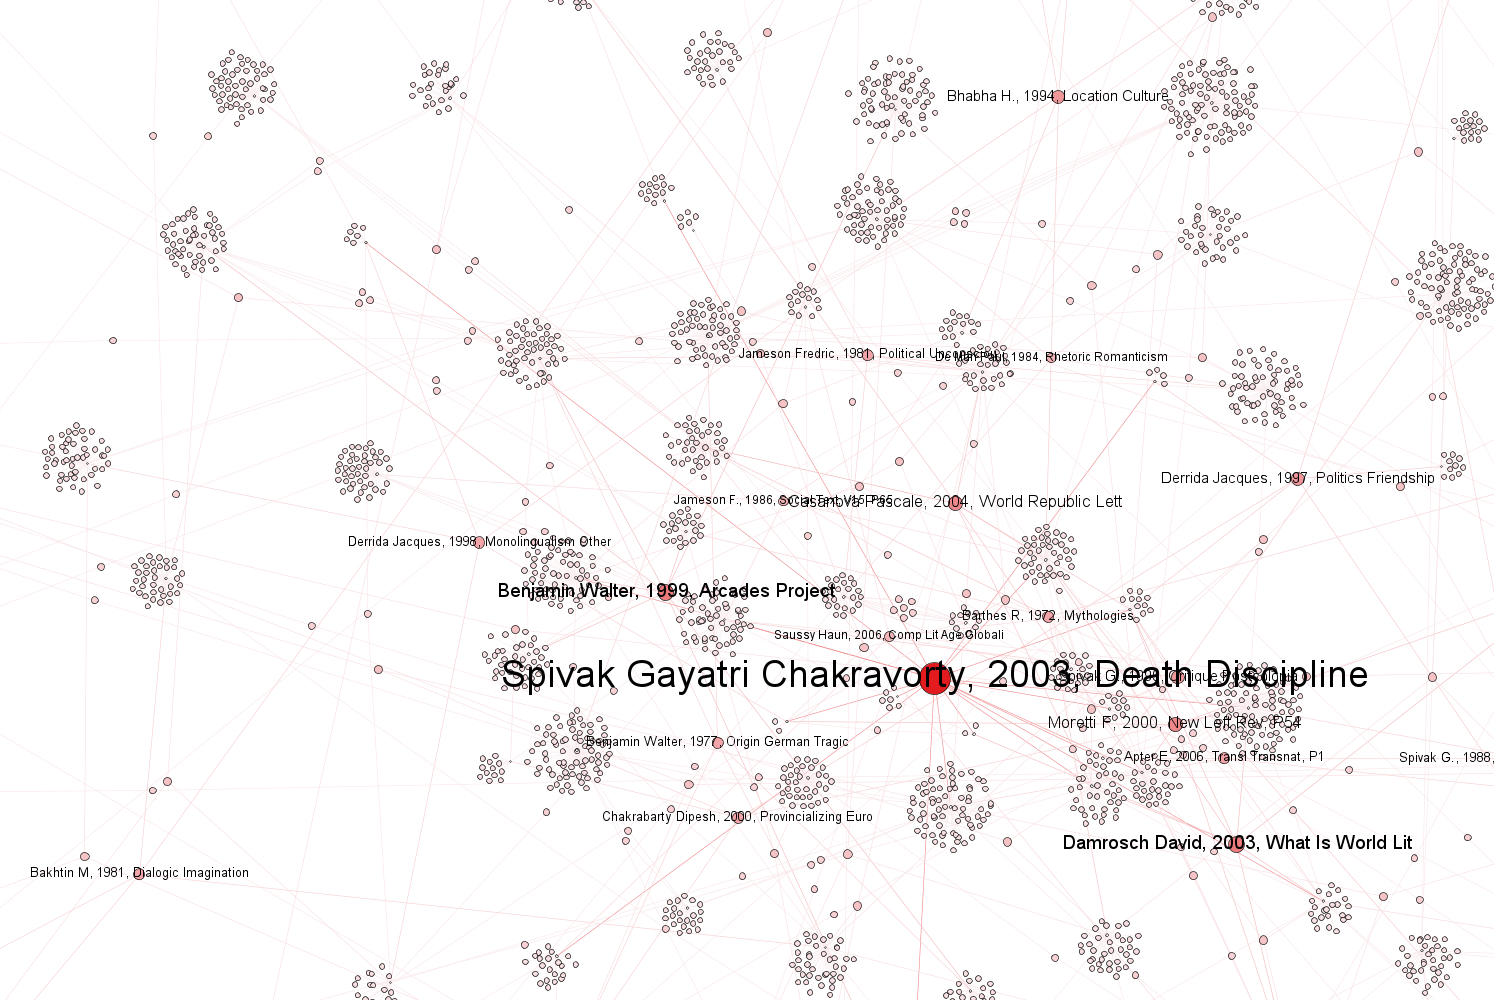 Citation network detail